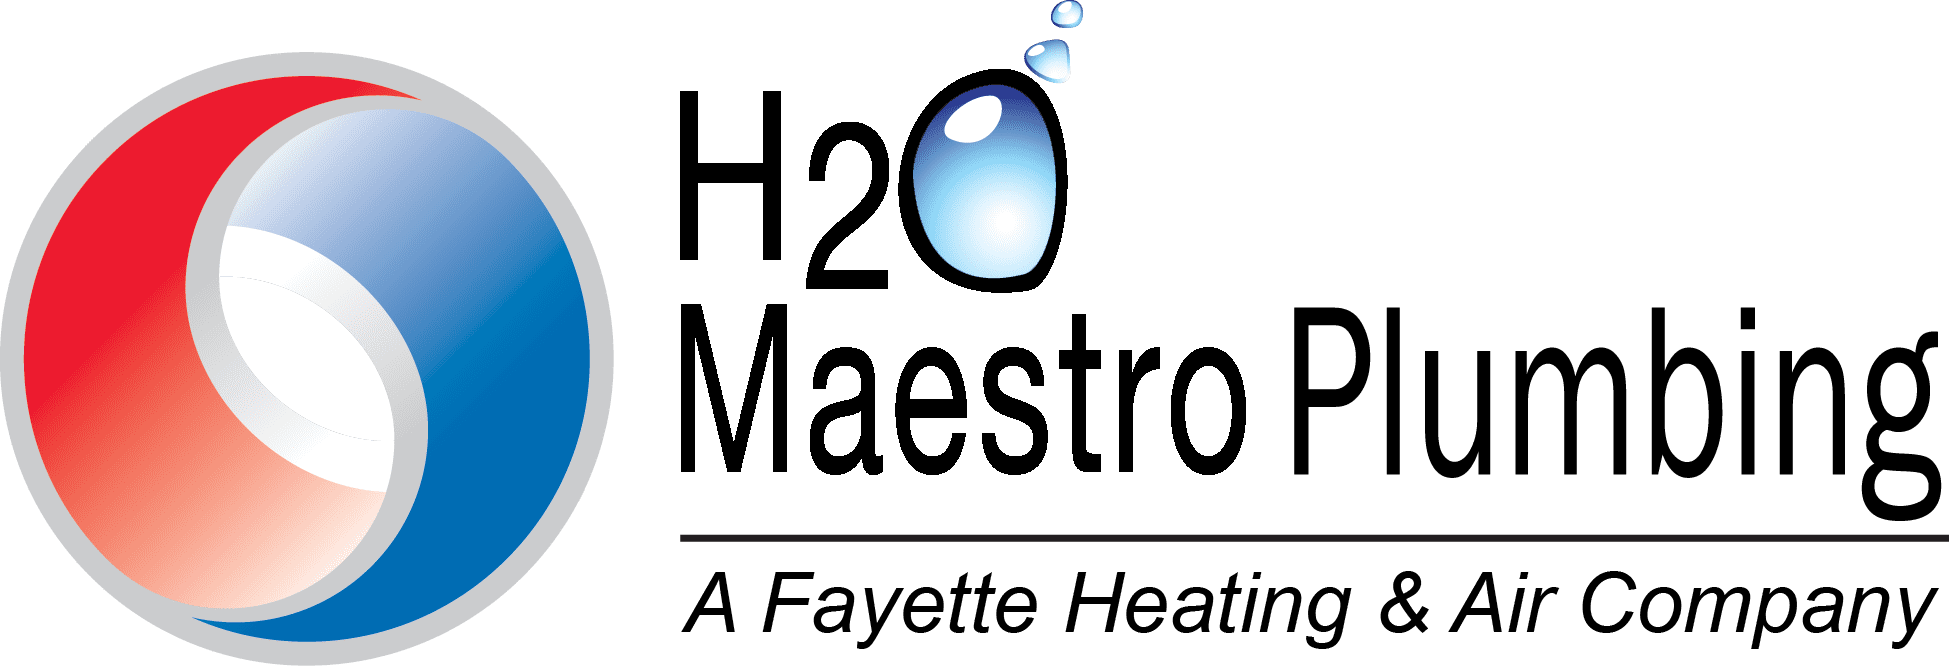 H2O Maestro Plumbing logo